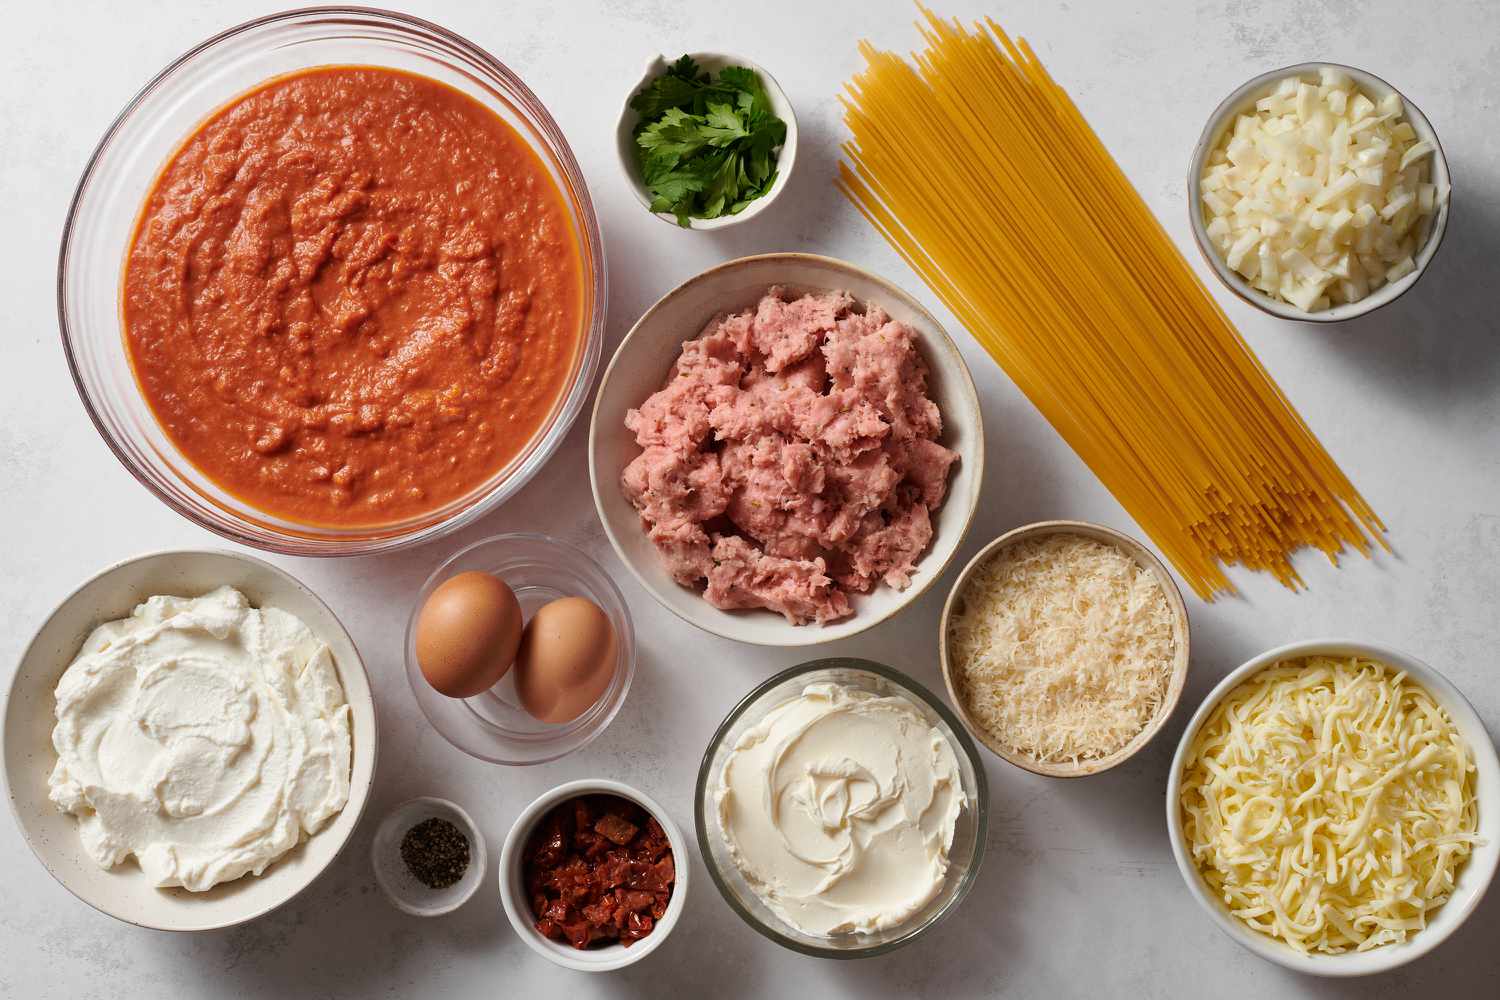 Ingredients to make million dollar spaghetti